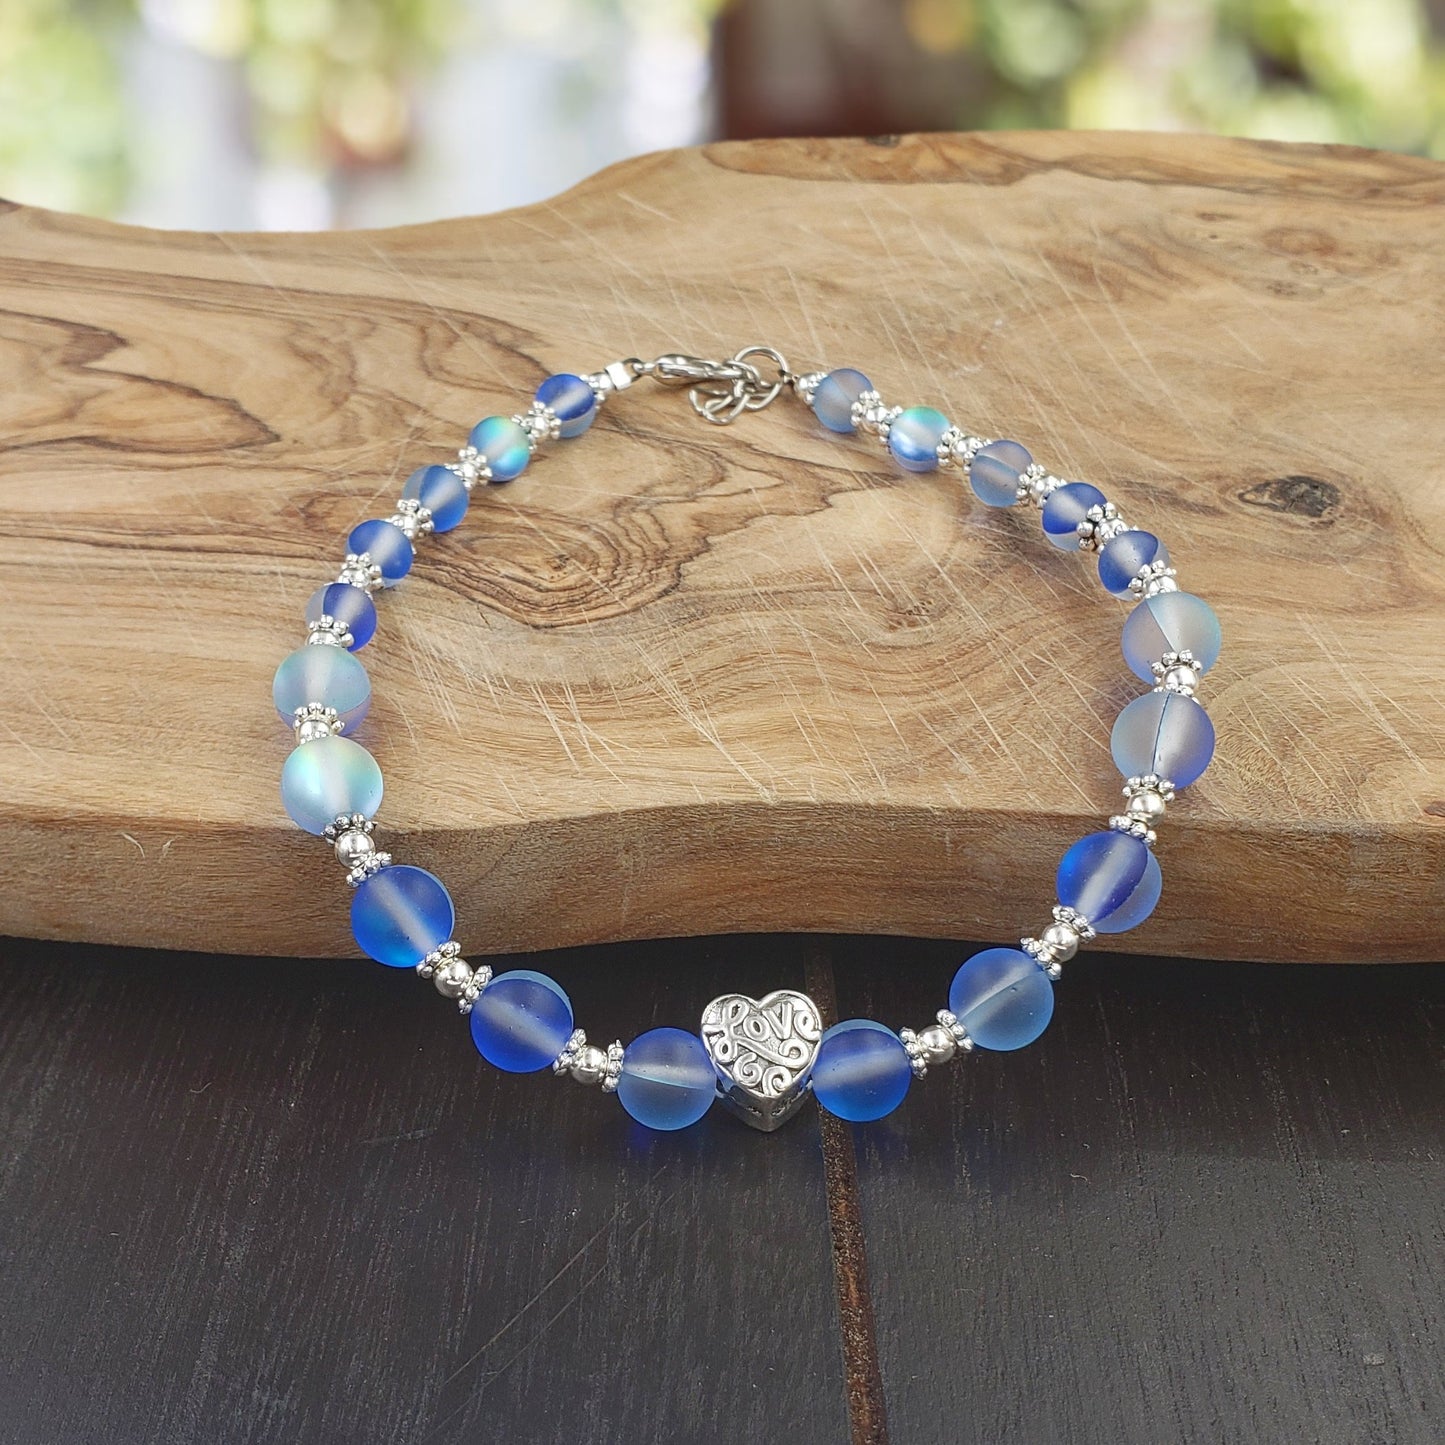 BESHEEK Silvertone and Blue AB frosted mermaid glass "love" heart Bracelet| Handmade Hypoallergenic Boho Beach Gala Wedding Style Jewelry